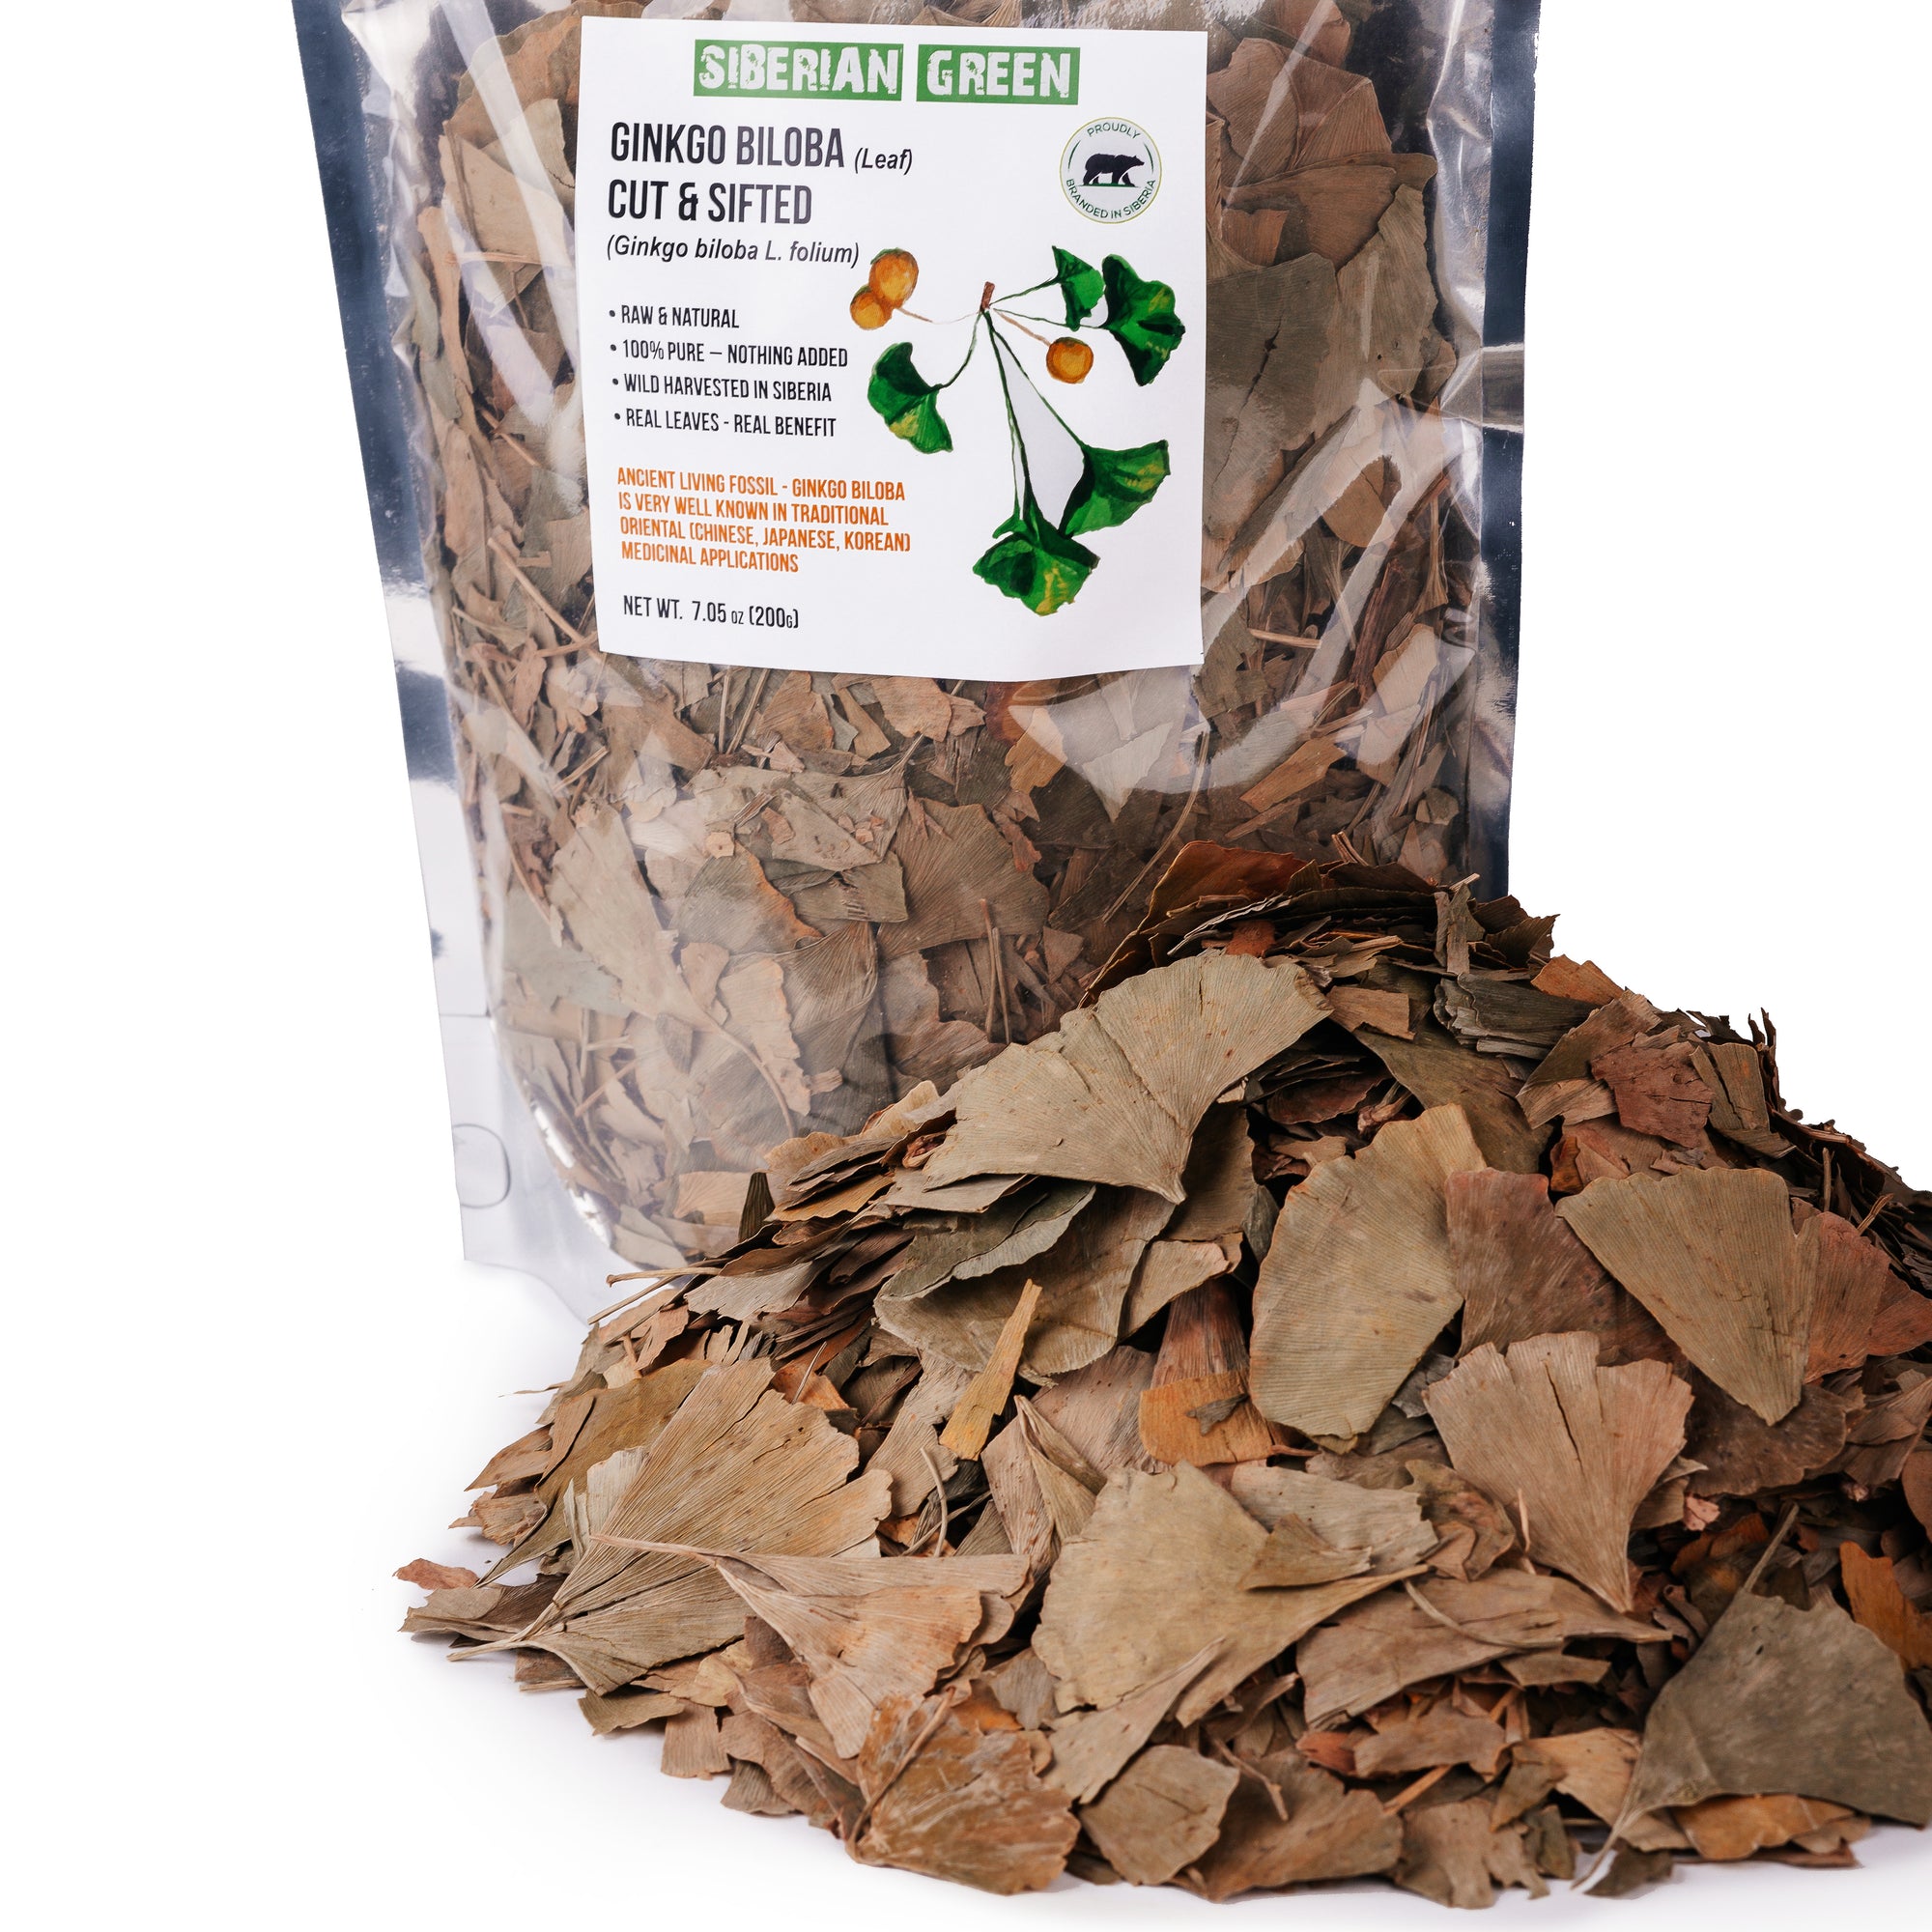 How to brew tea from a Ginkgo Biloba leaf?